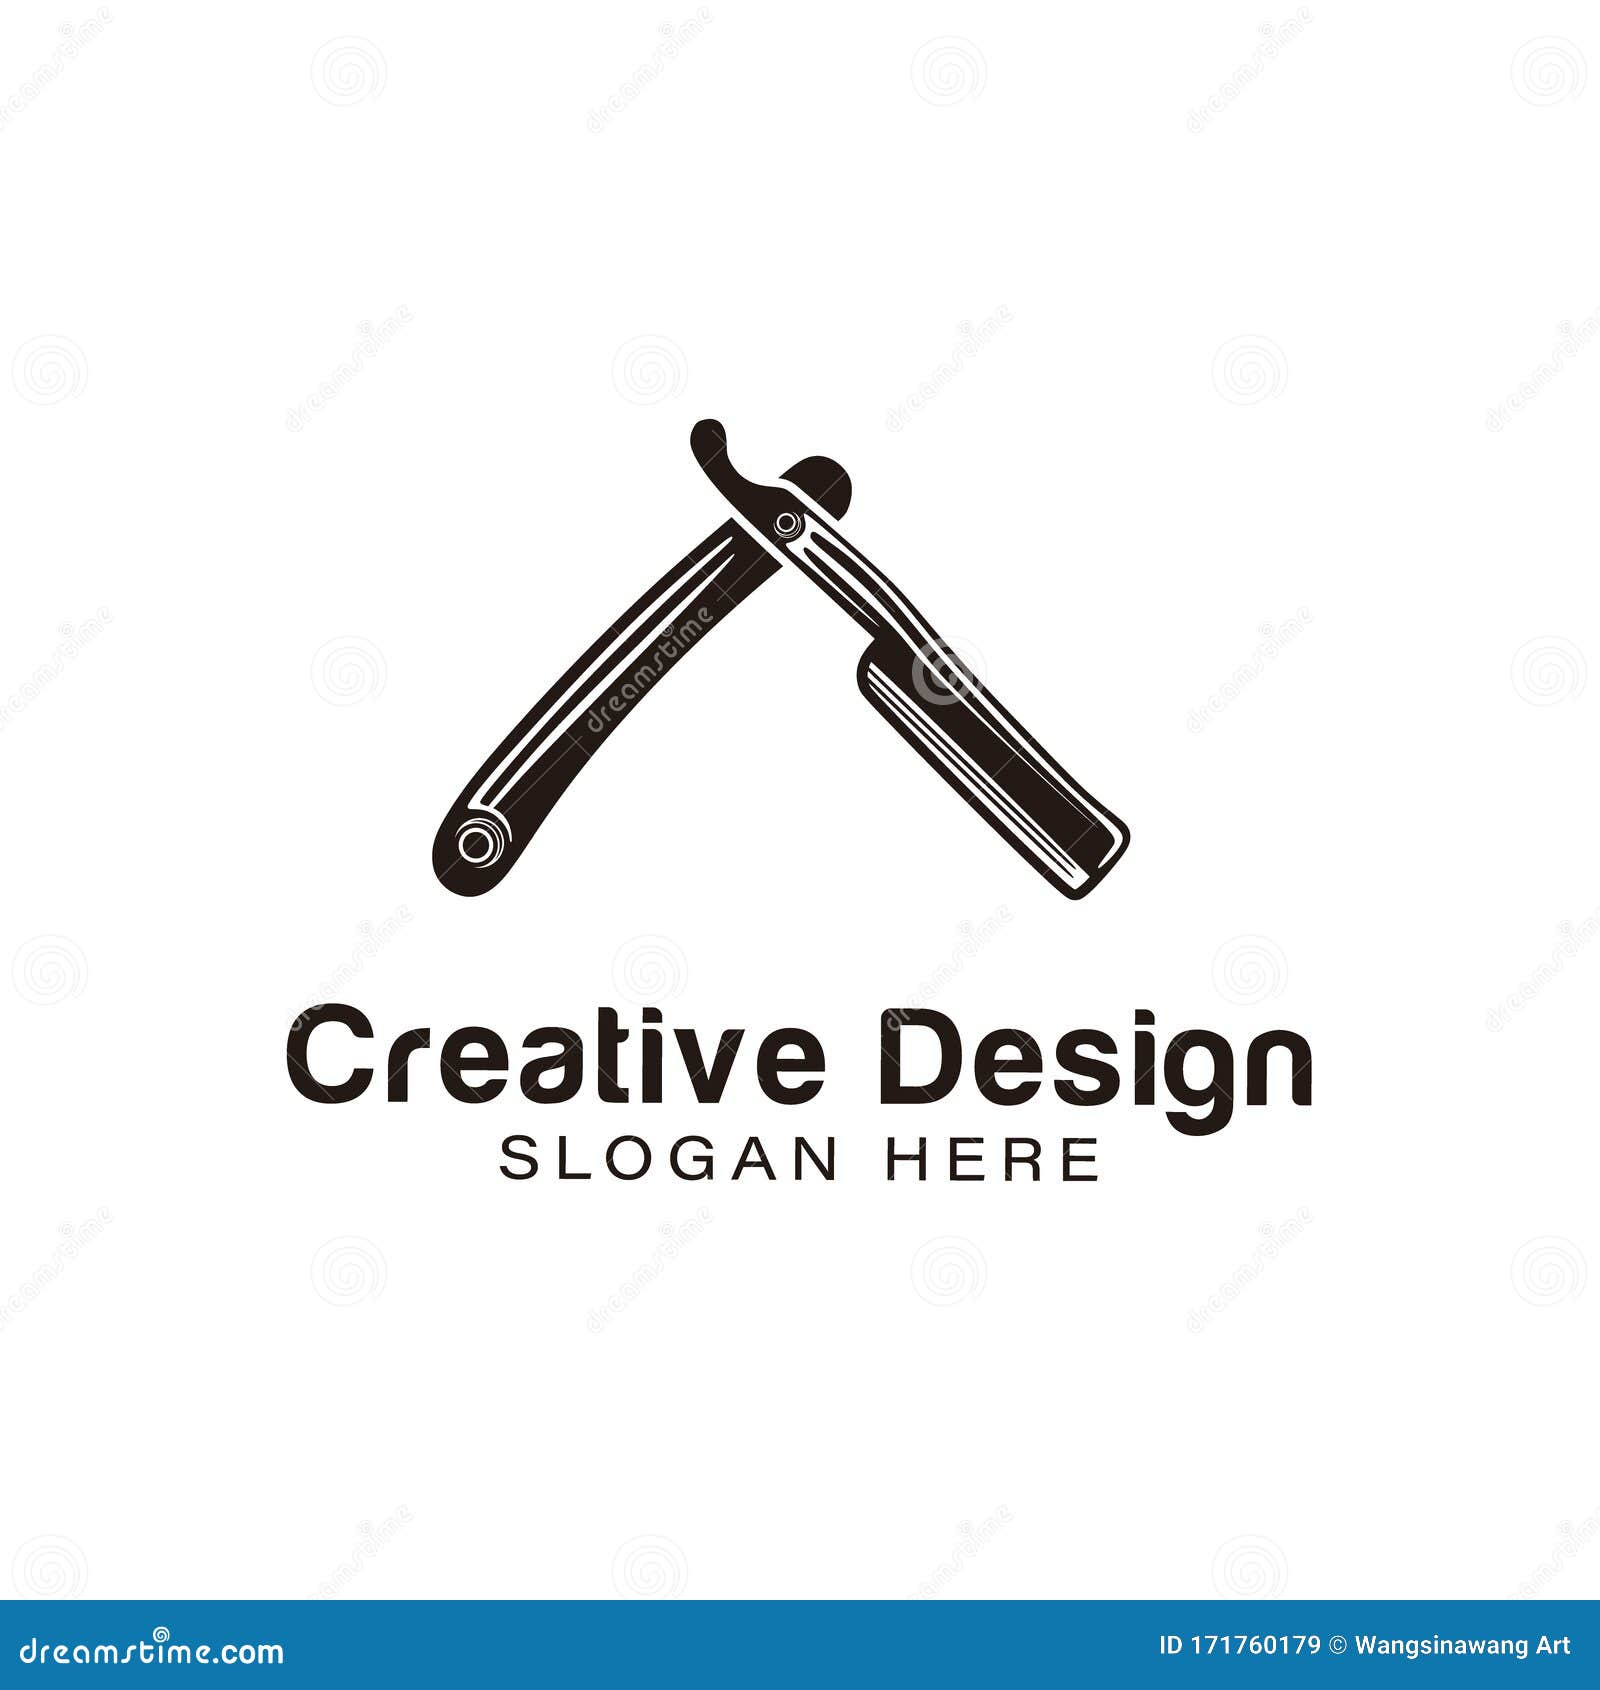 Barber Shop Logo Ideas: Design a Barber Shop Logo